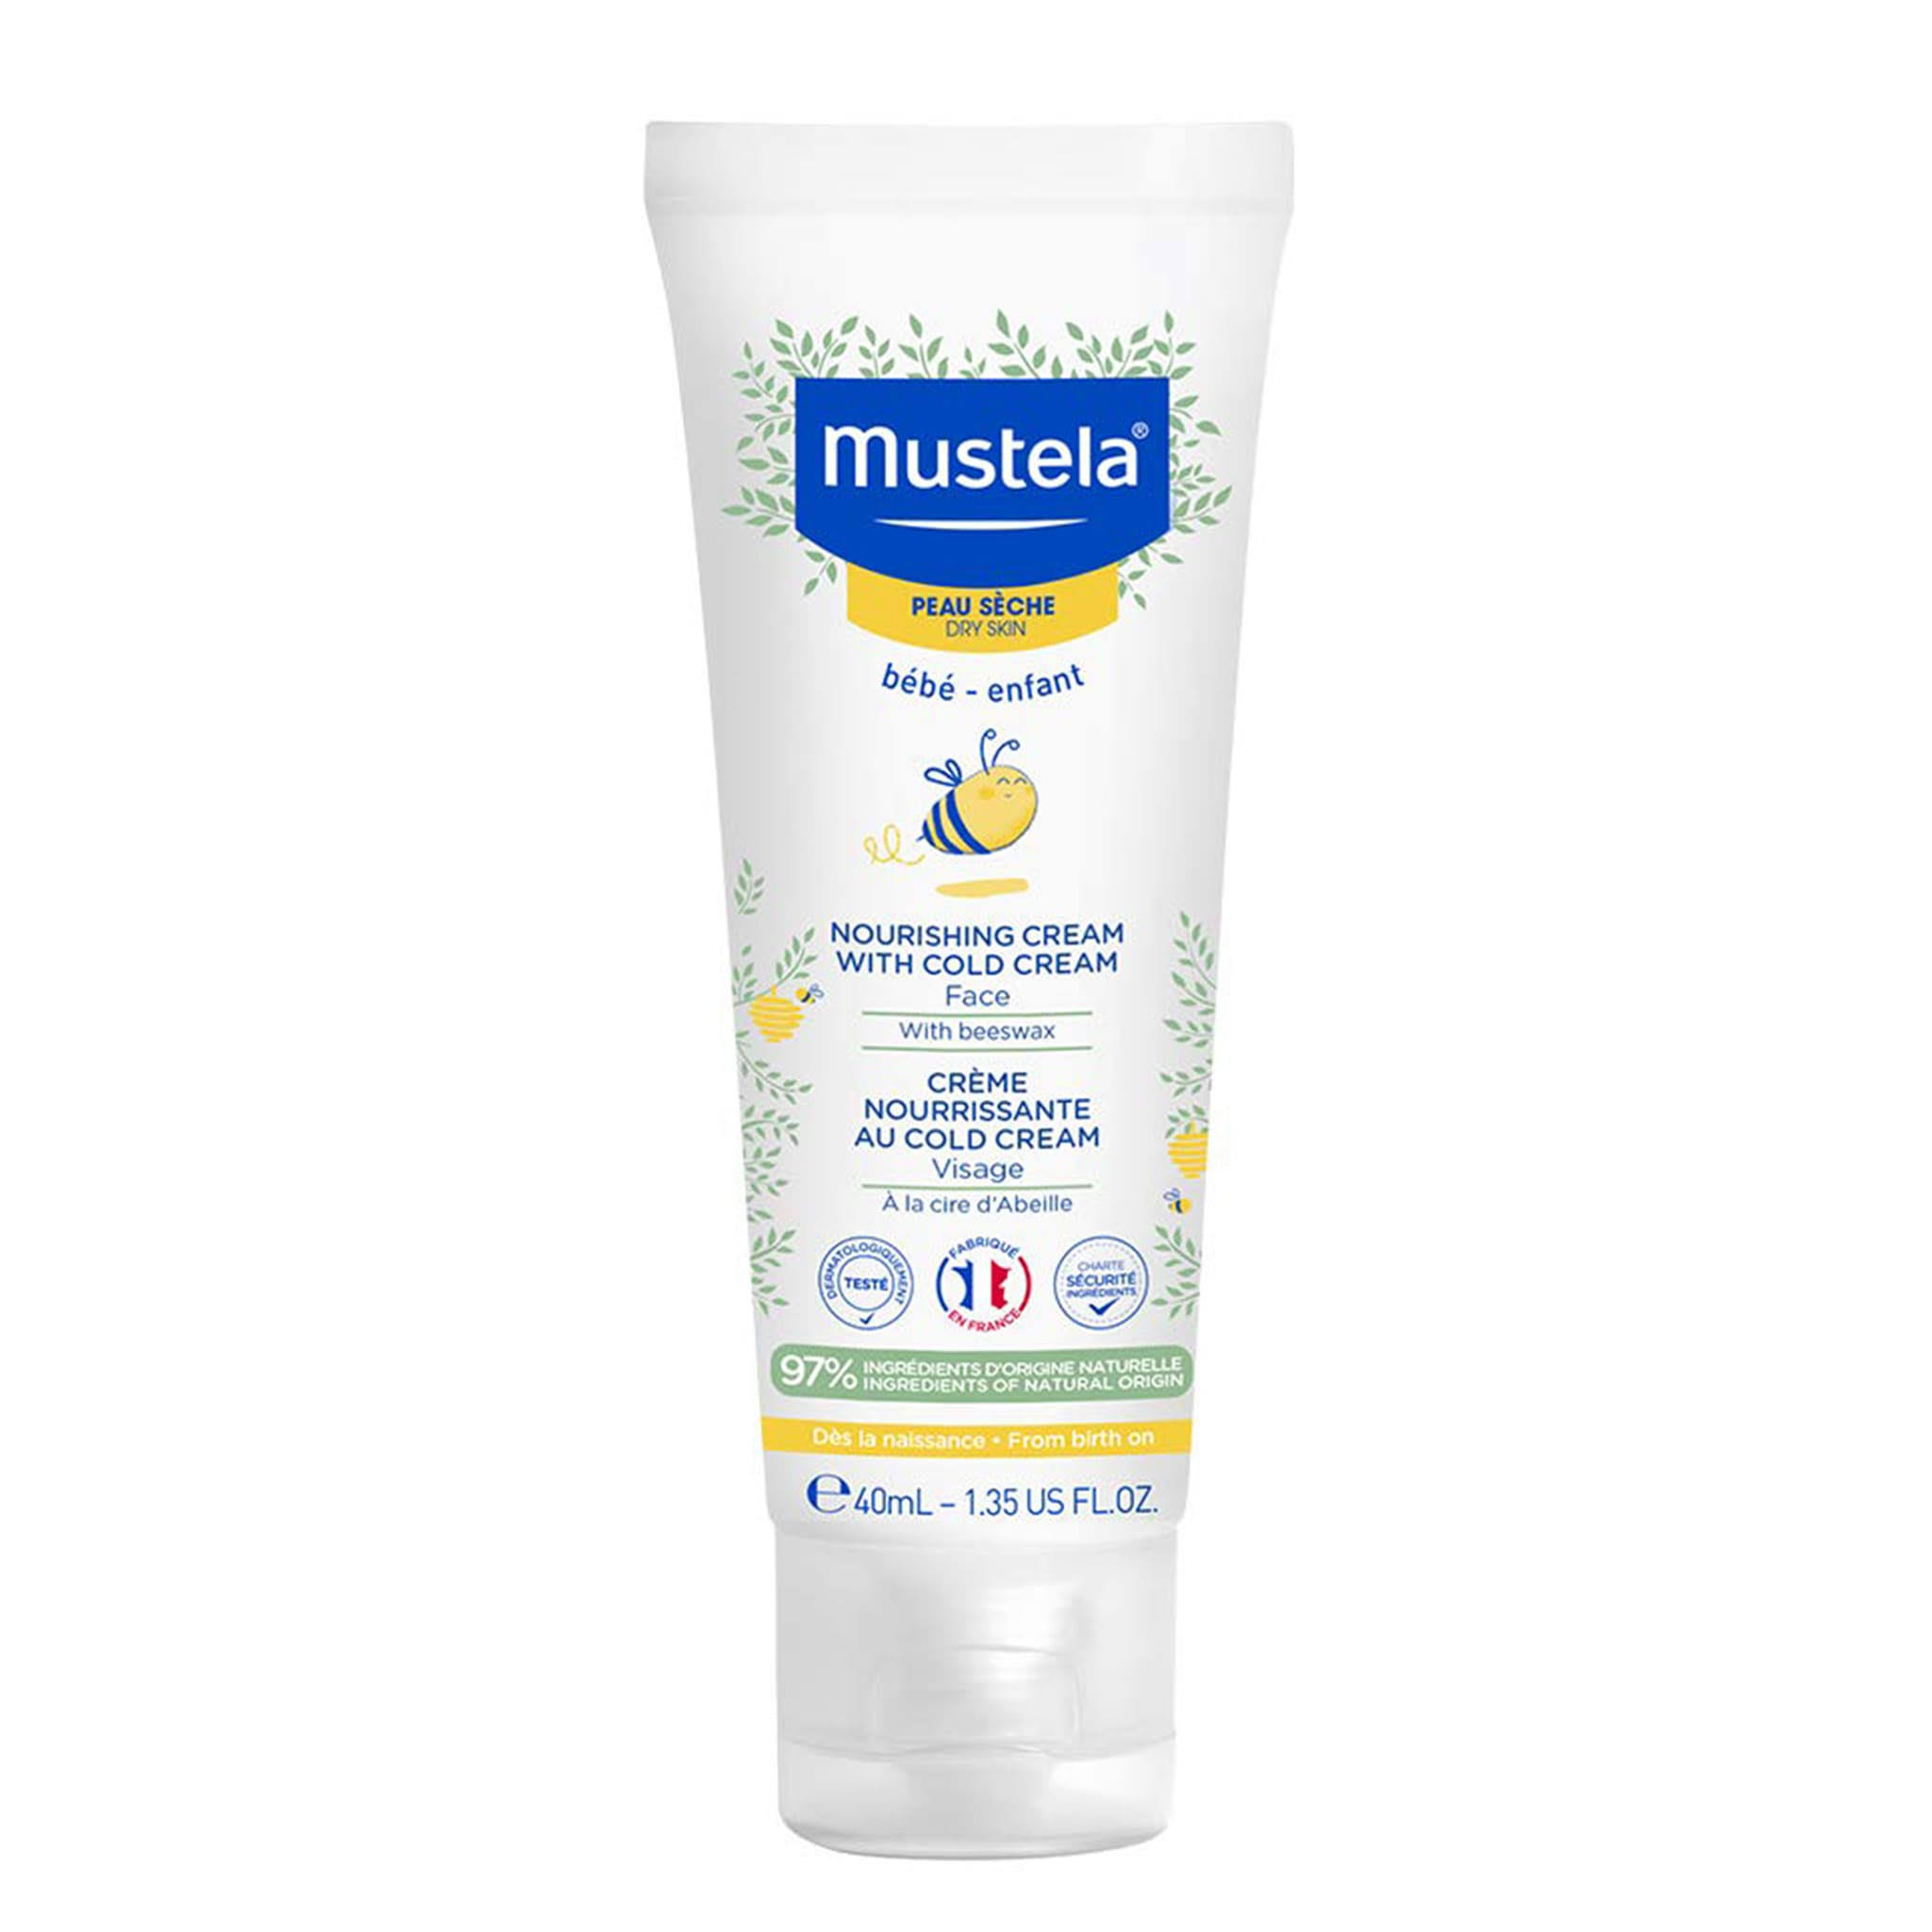 Mustela Nourishing Cream - with Cold Cream, 40ml